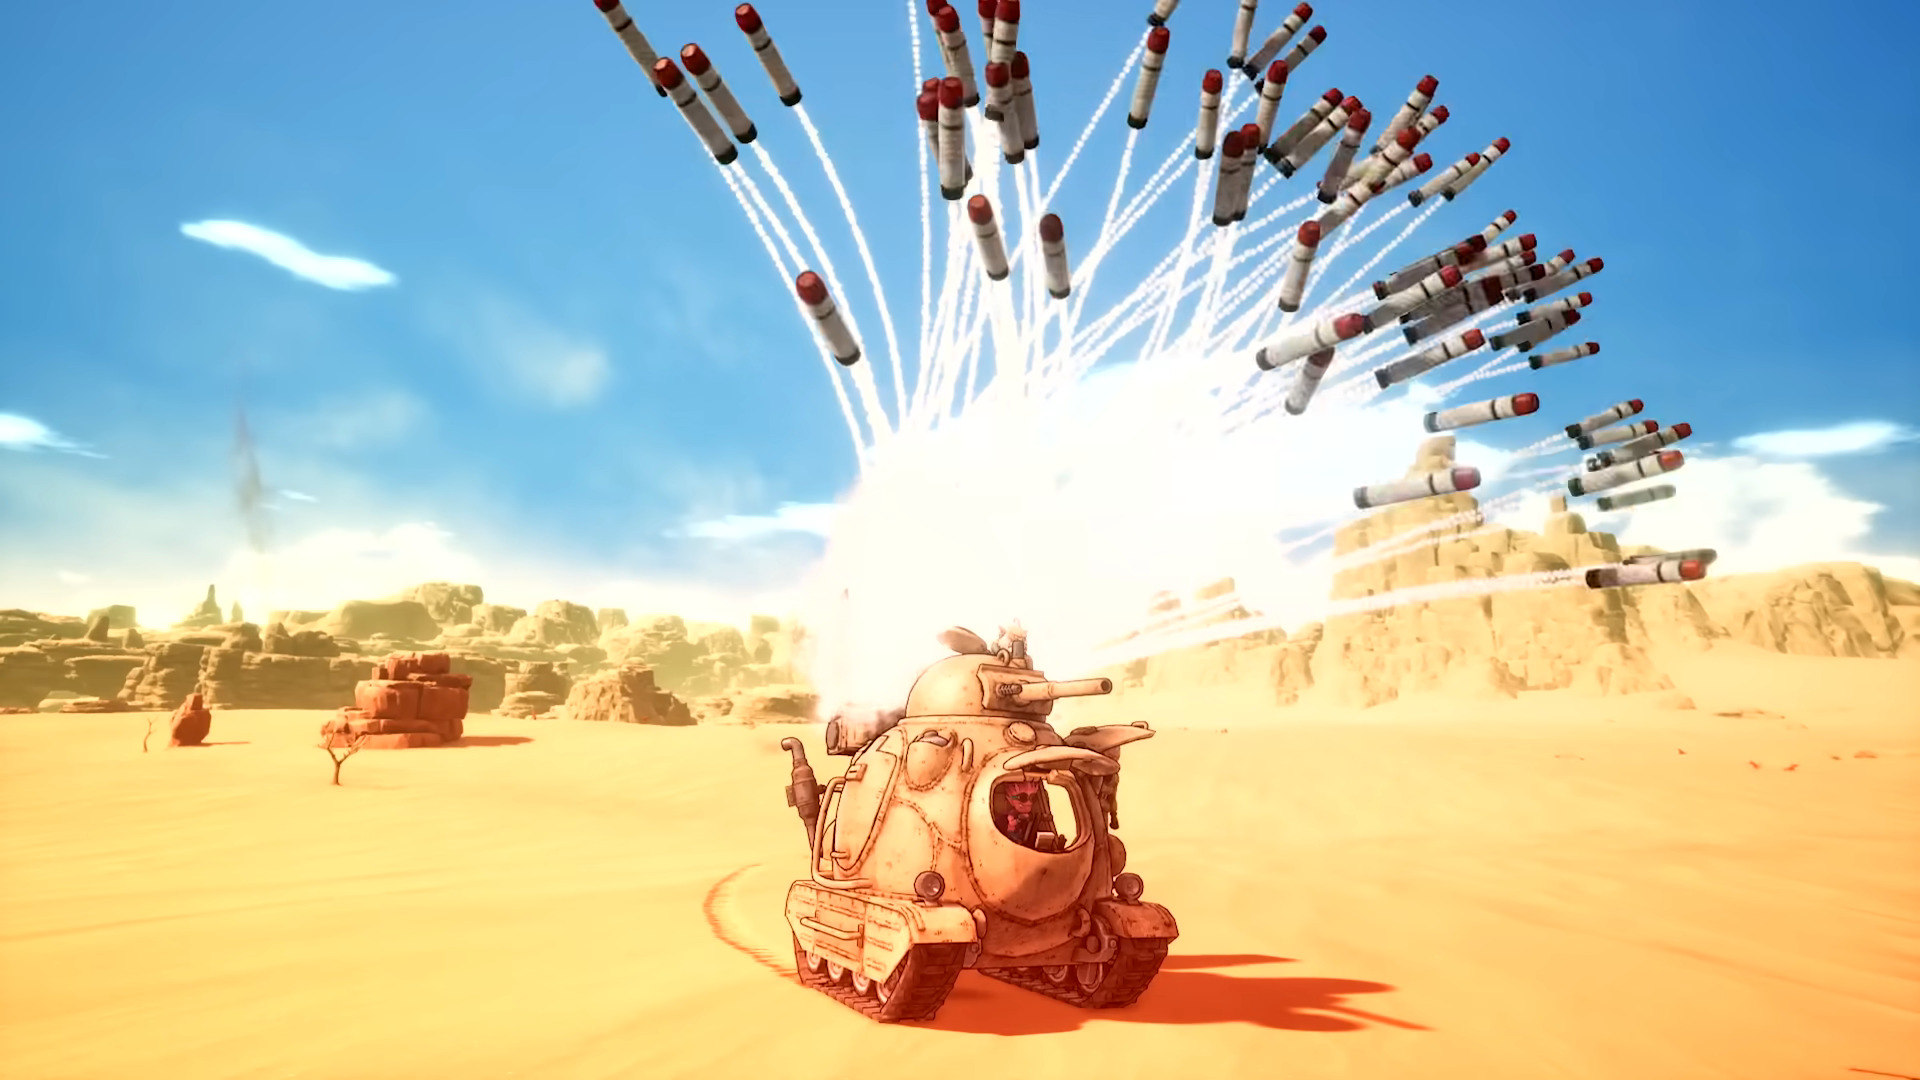 Beezlebub unleashes his tank's payload in Sand Land (2023), Bandai Namco